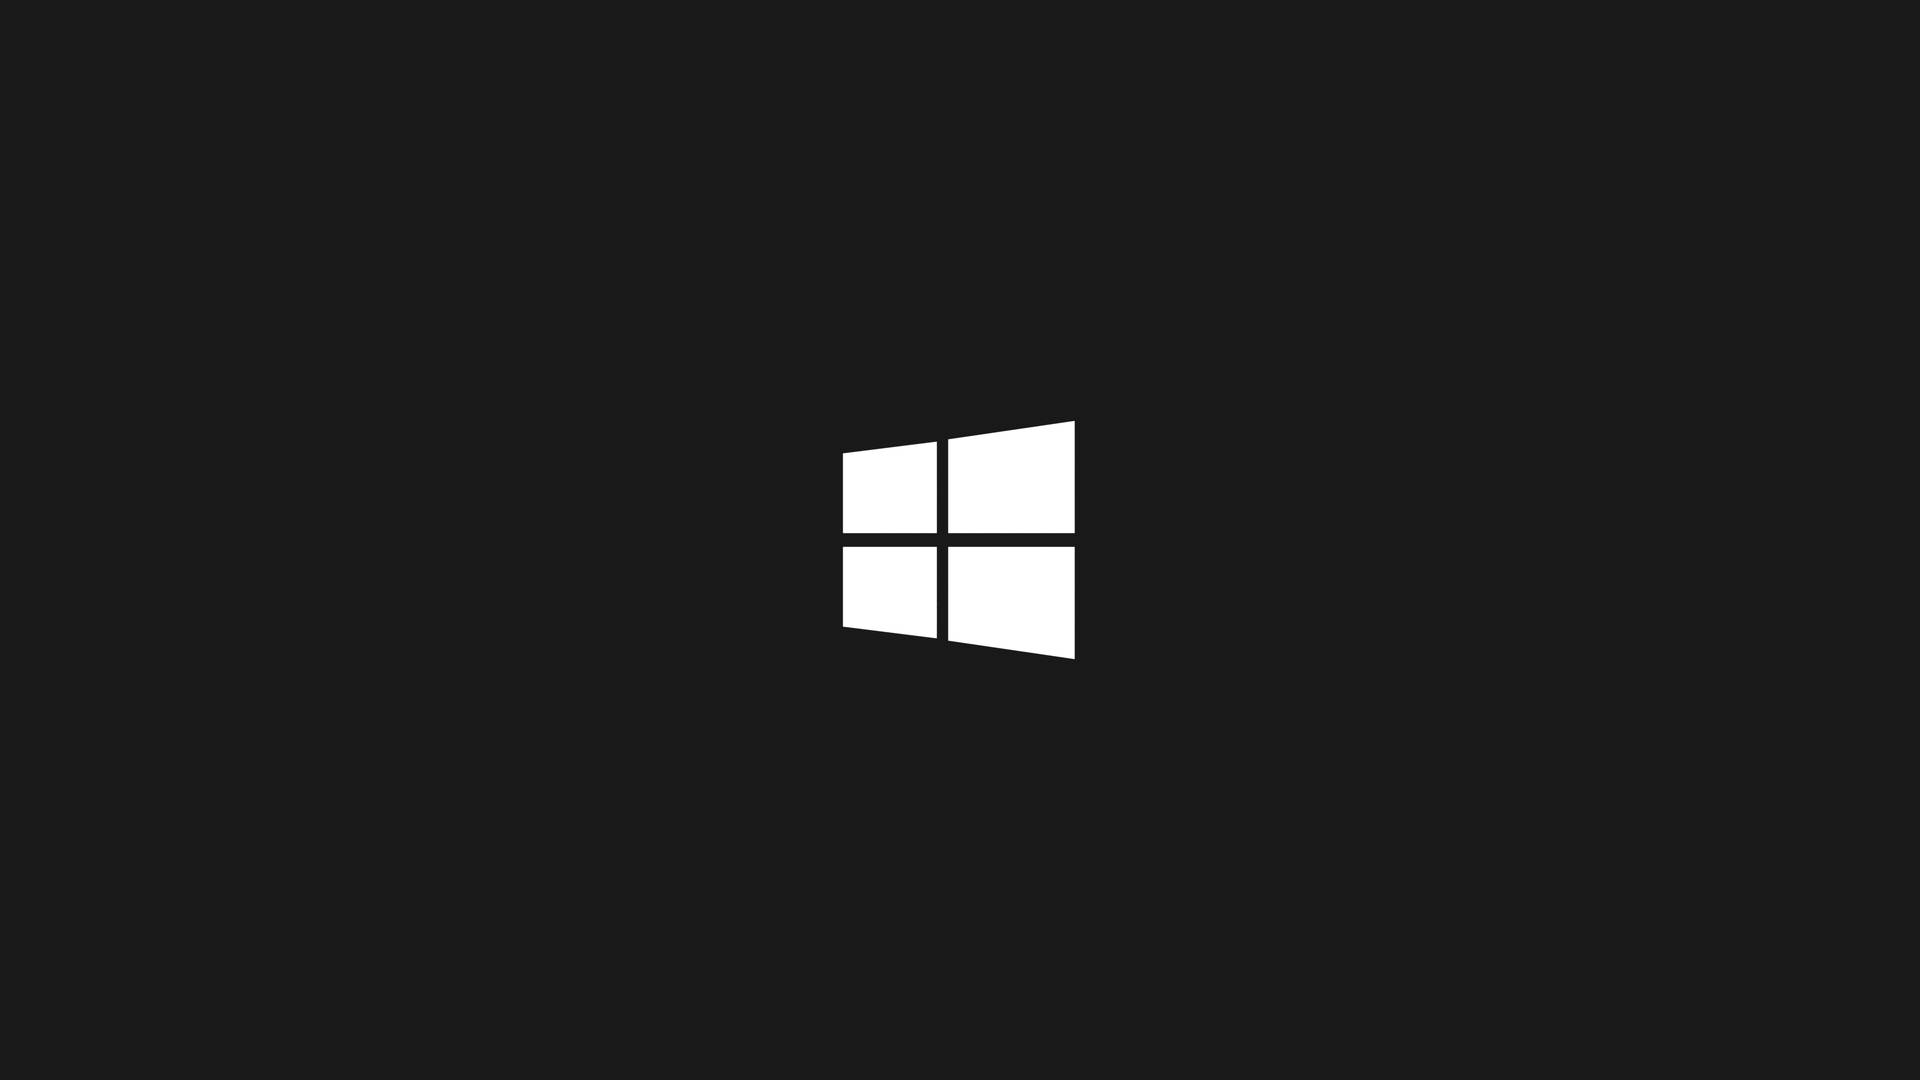 Minimalist Windows 10 Hd White Logo Background